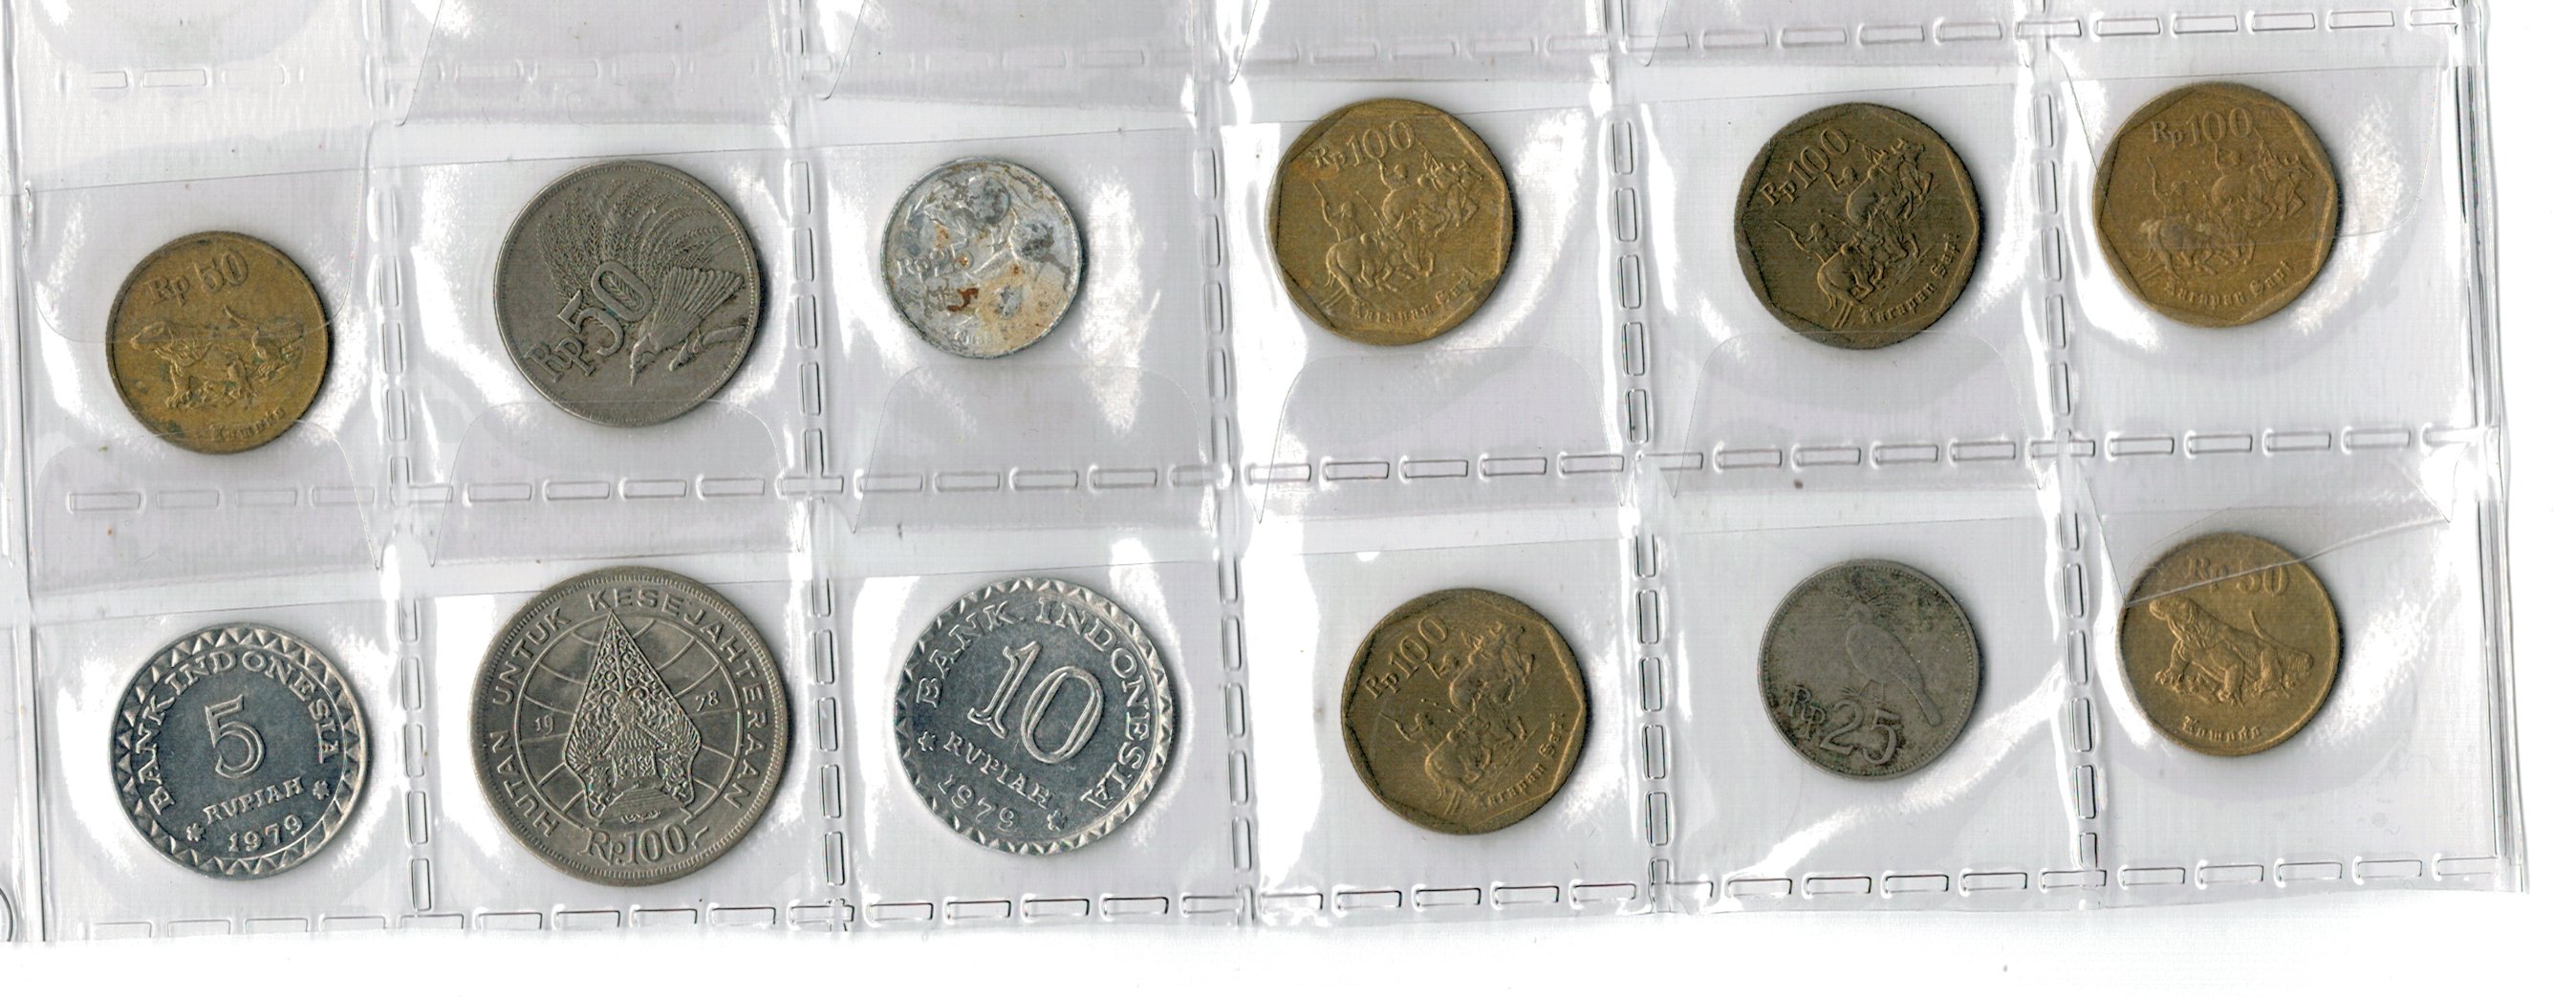 Indonesia - Lot 12 monede circulate